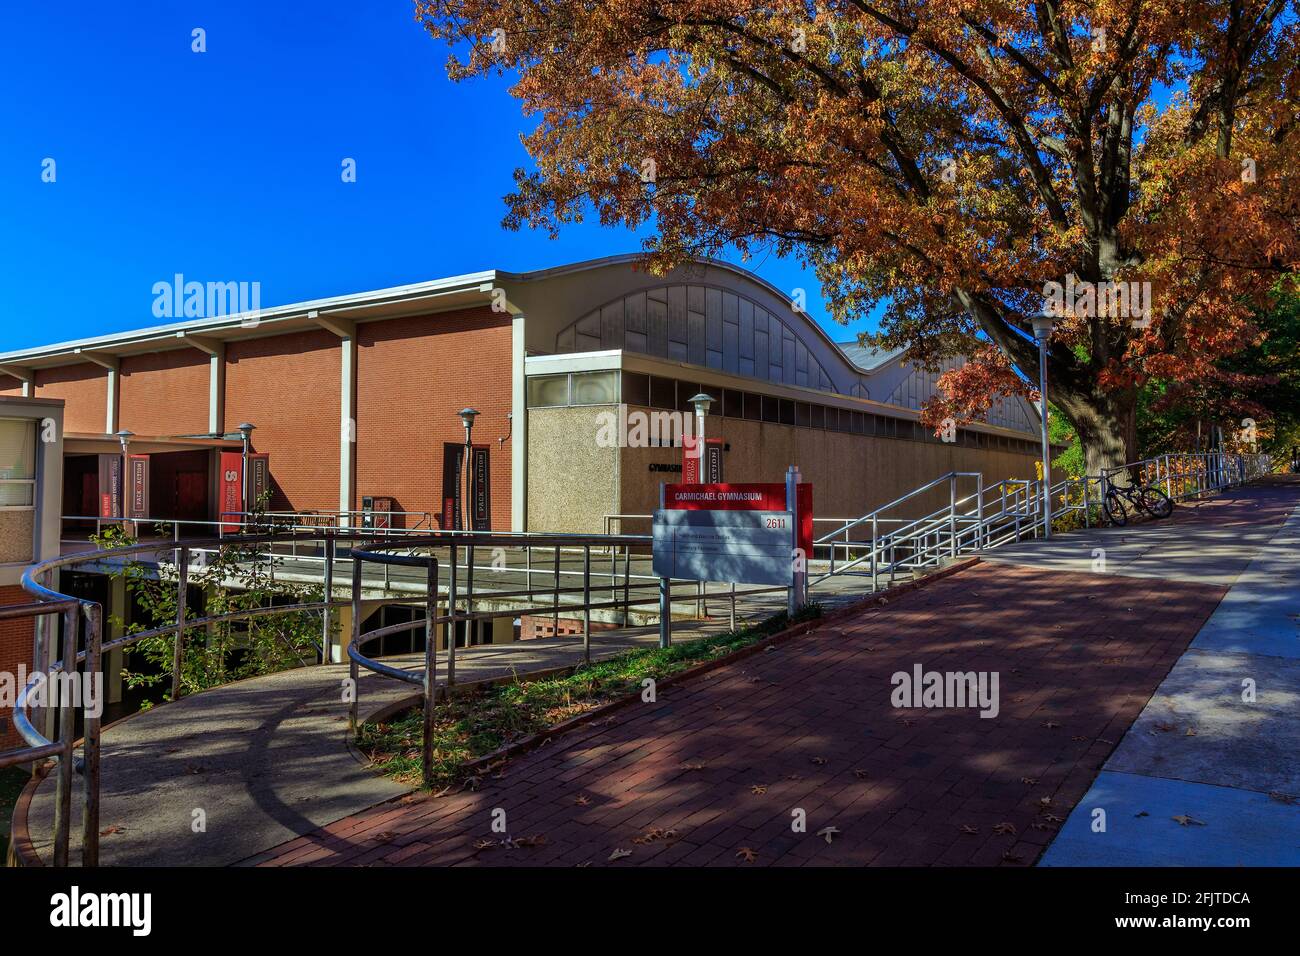 RALEIGH, NC, USA - NOVEMBER 24: William D. Carmichael Jr. Gymnasium on November 24, 2017 at North Carolina State University in Raleigh, North Carolina Stock Photo